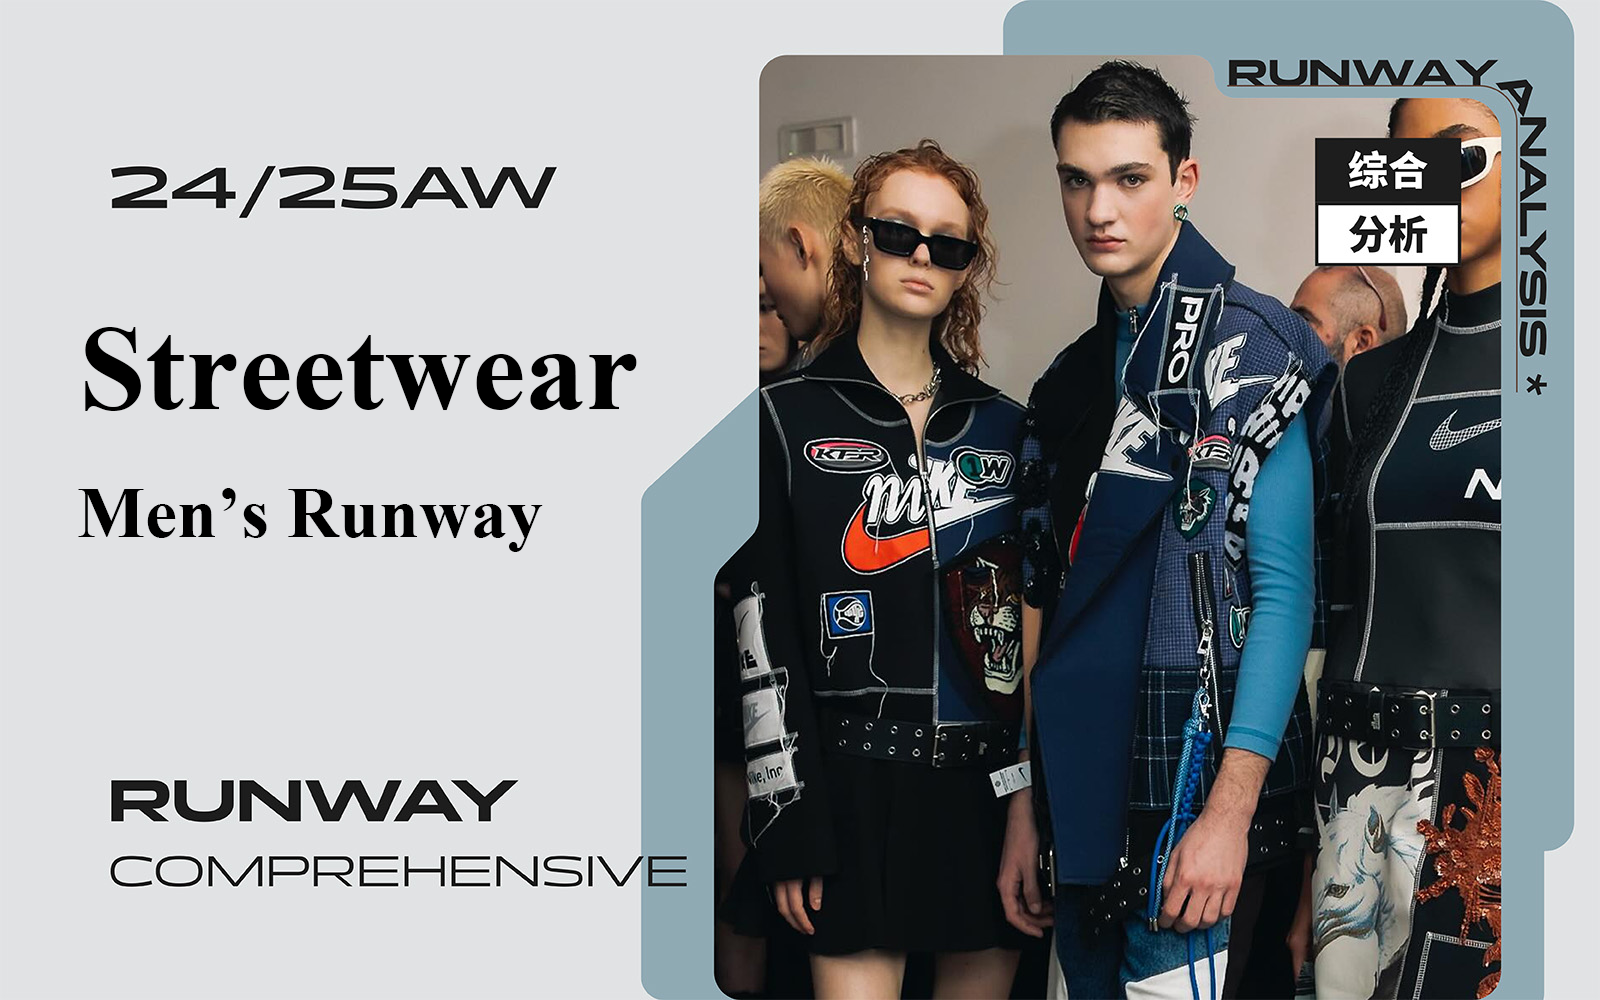 Streetwear Fashion -- The Comprehensive Runway Analysis of Menswear